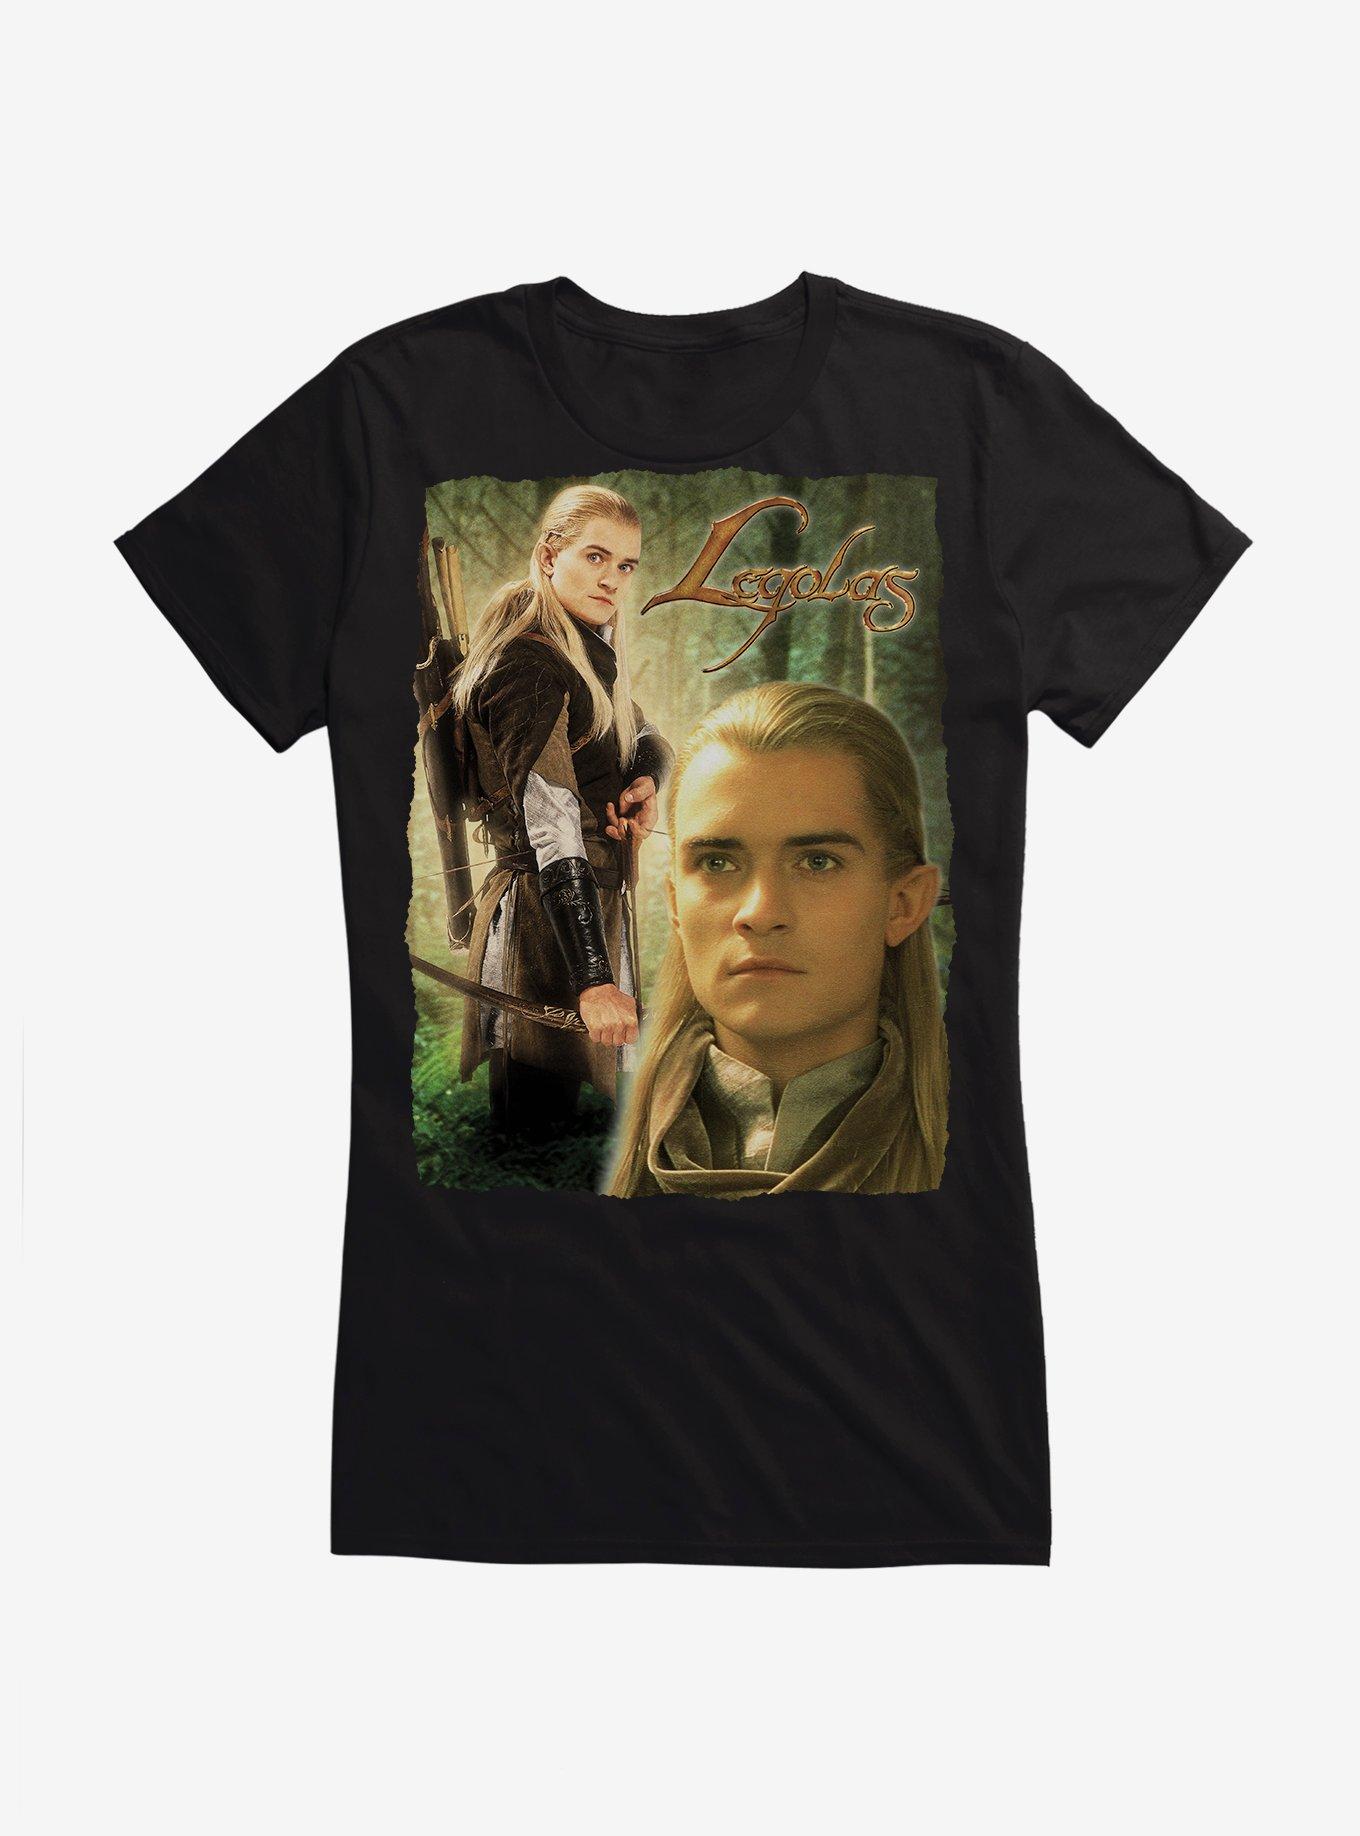 The Lord Of Rings Legolas Girls T-Shirt